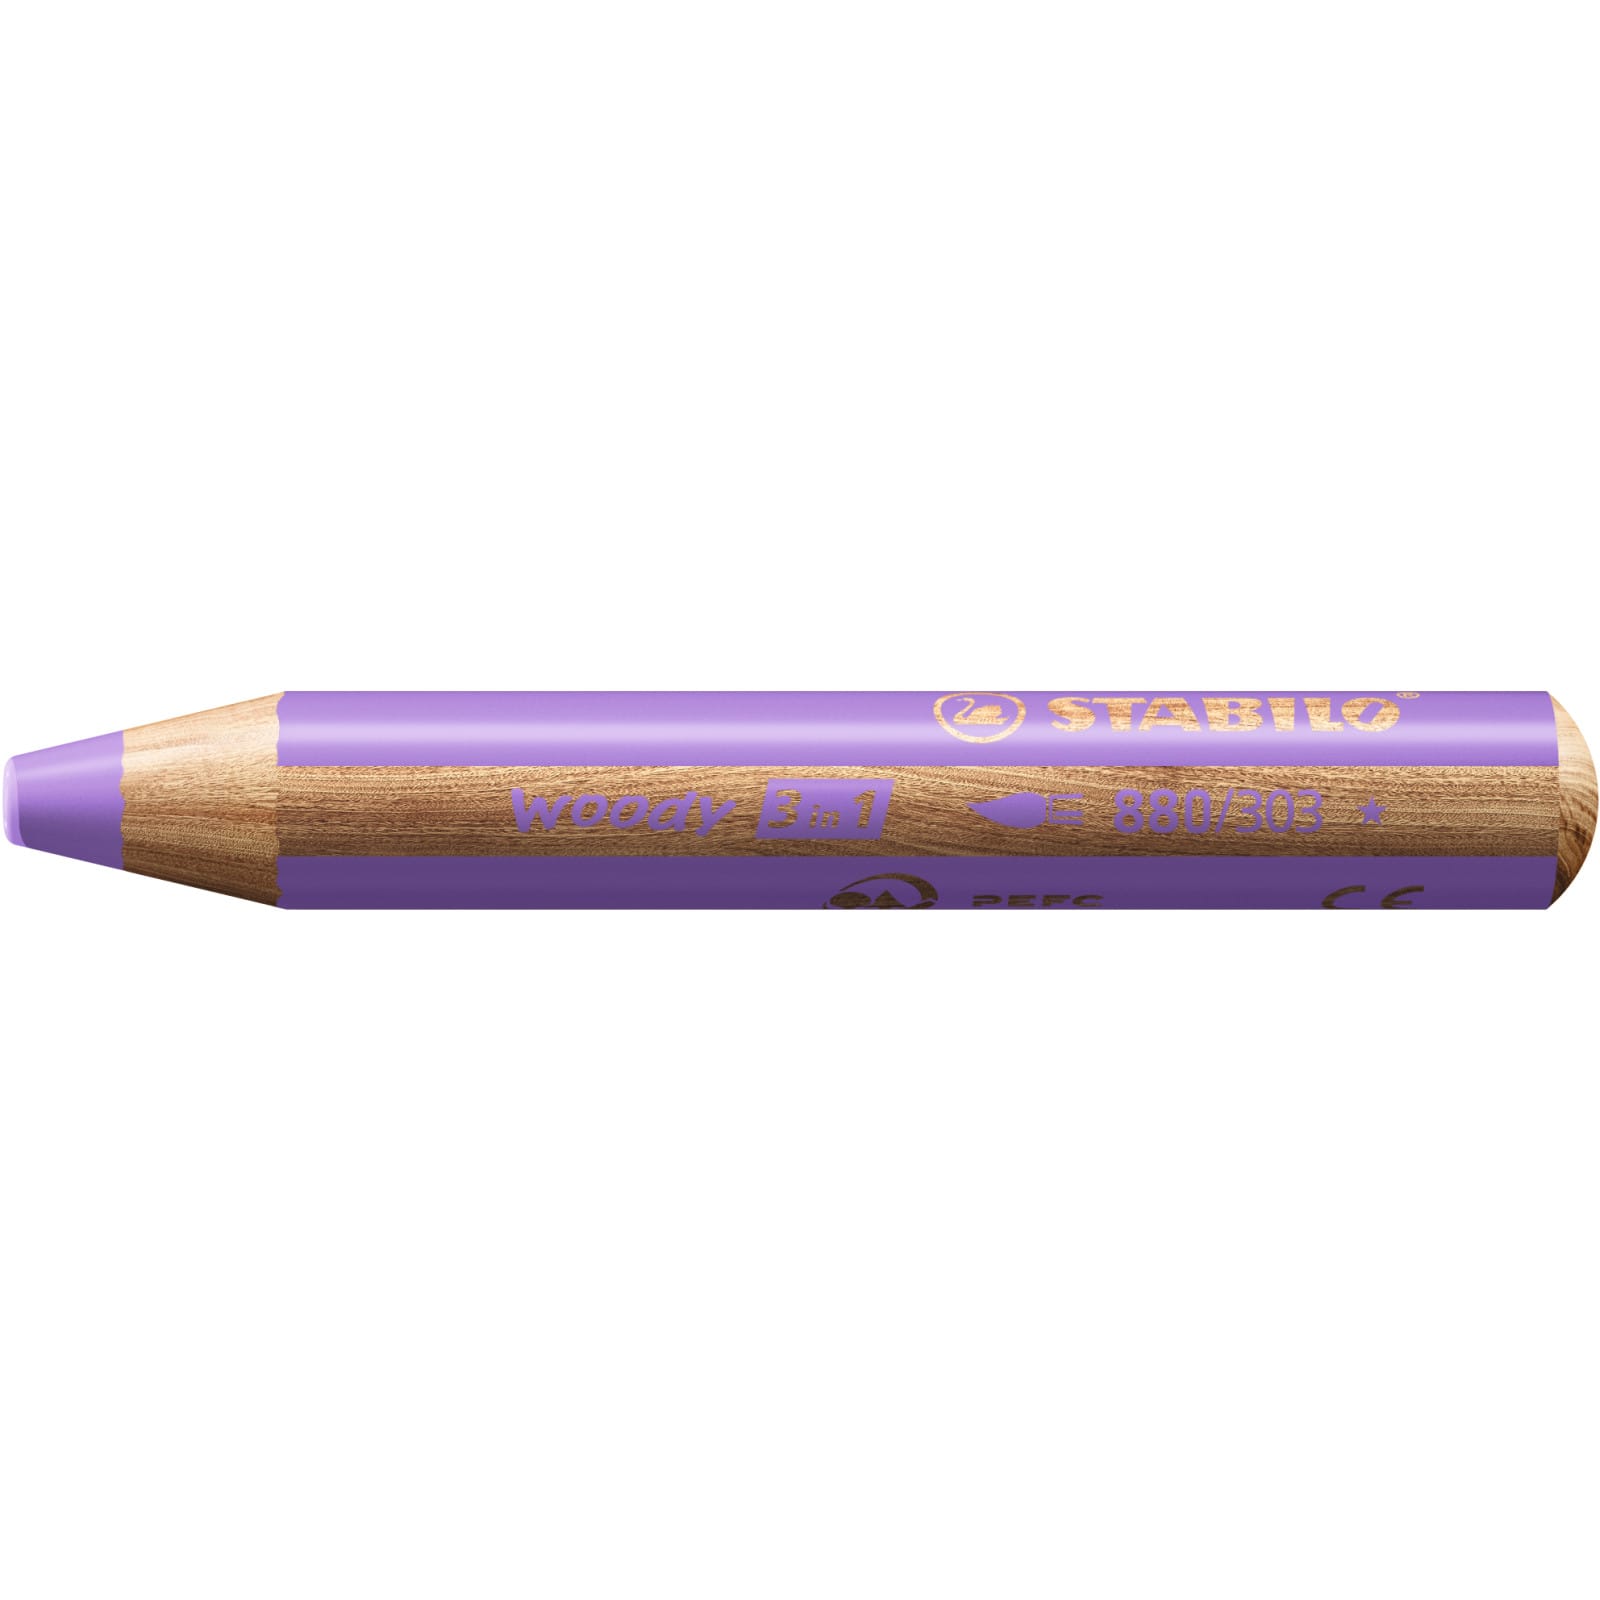 STABILO Woody 3 in 1 - Crayon de couleur pointe large - violet